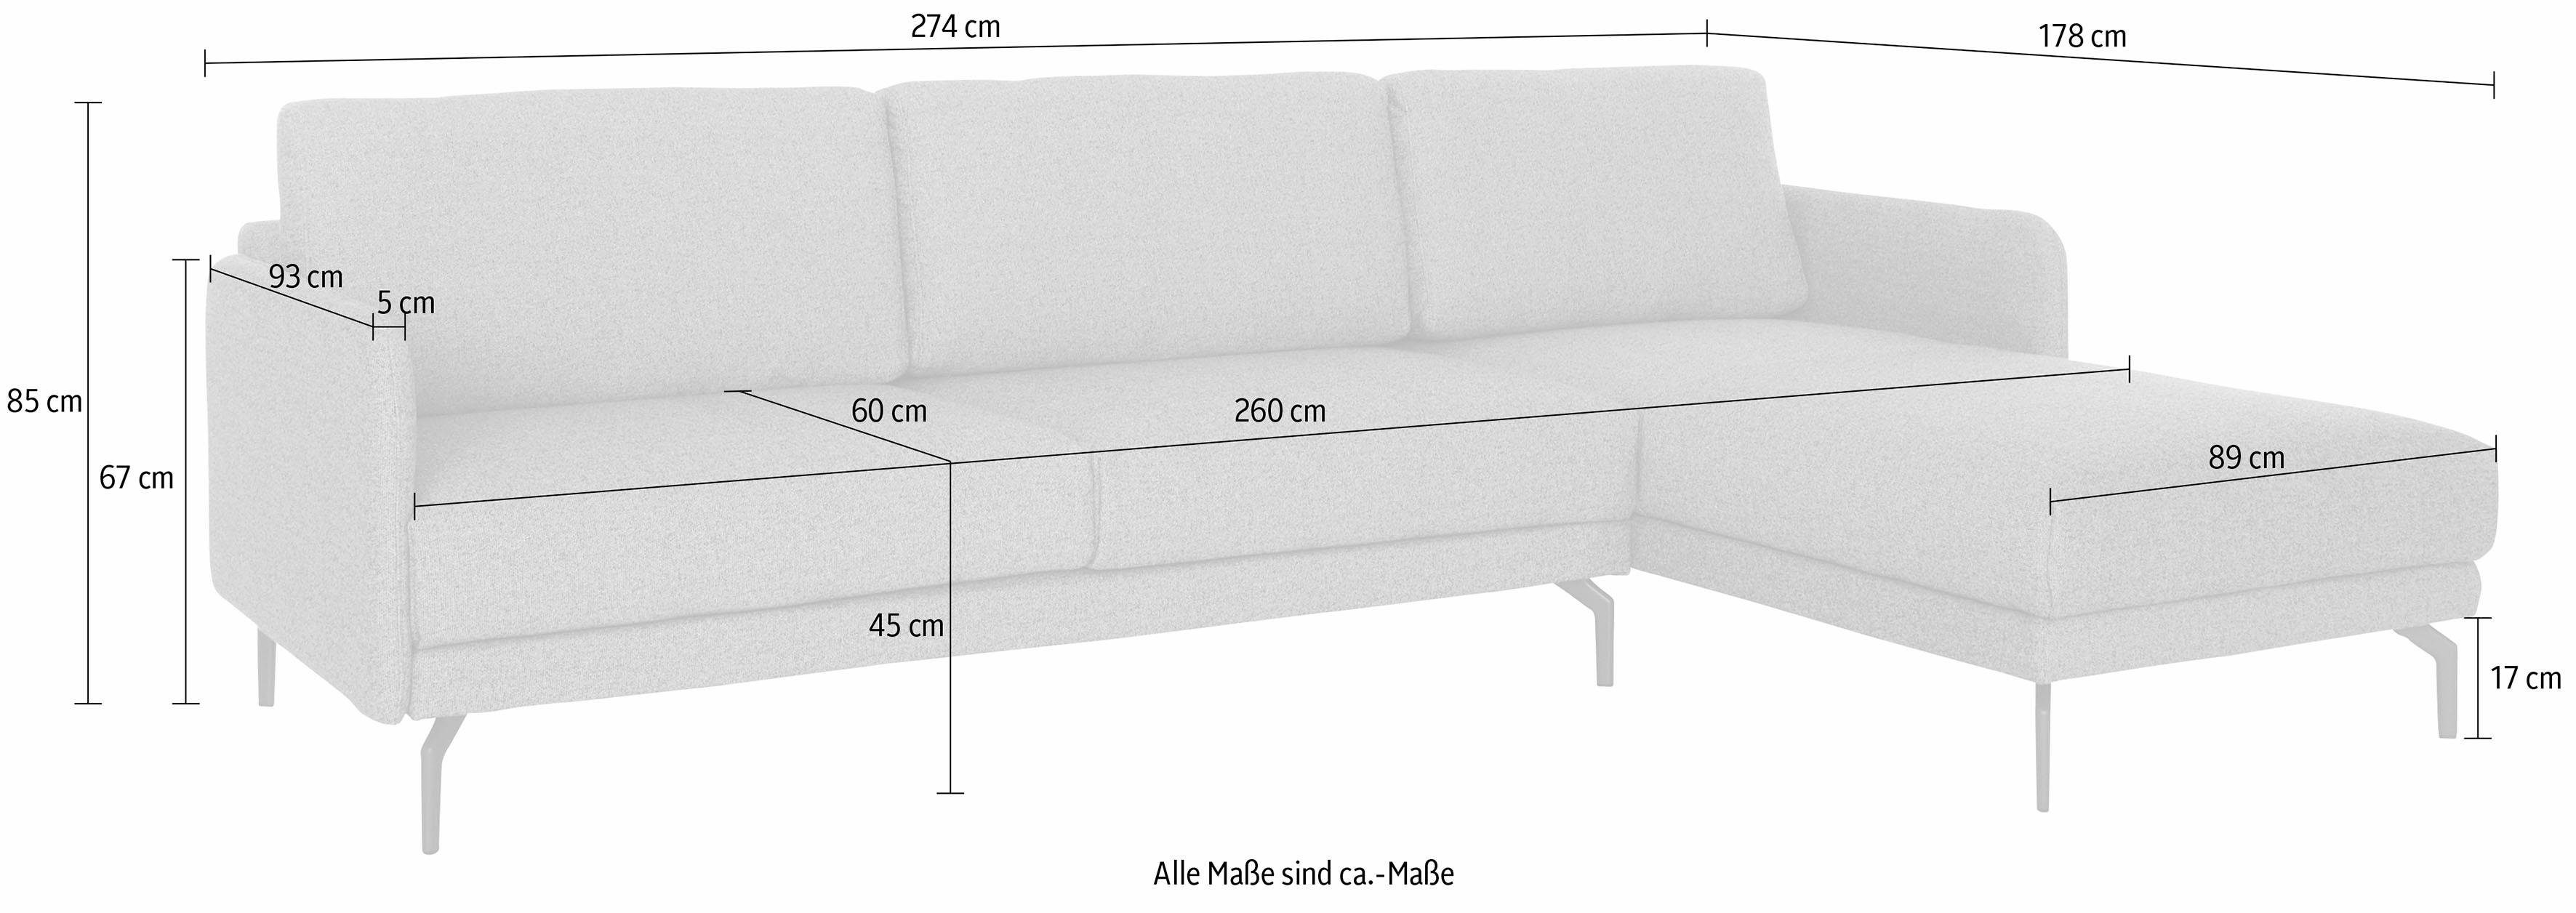 Armlehne 274 sofa sehr cm, Breite Umbragrau Alugussfuß Ecksofa schmal, hülsta hs.450,